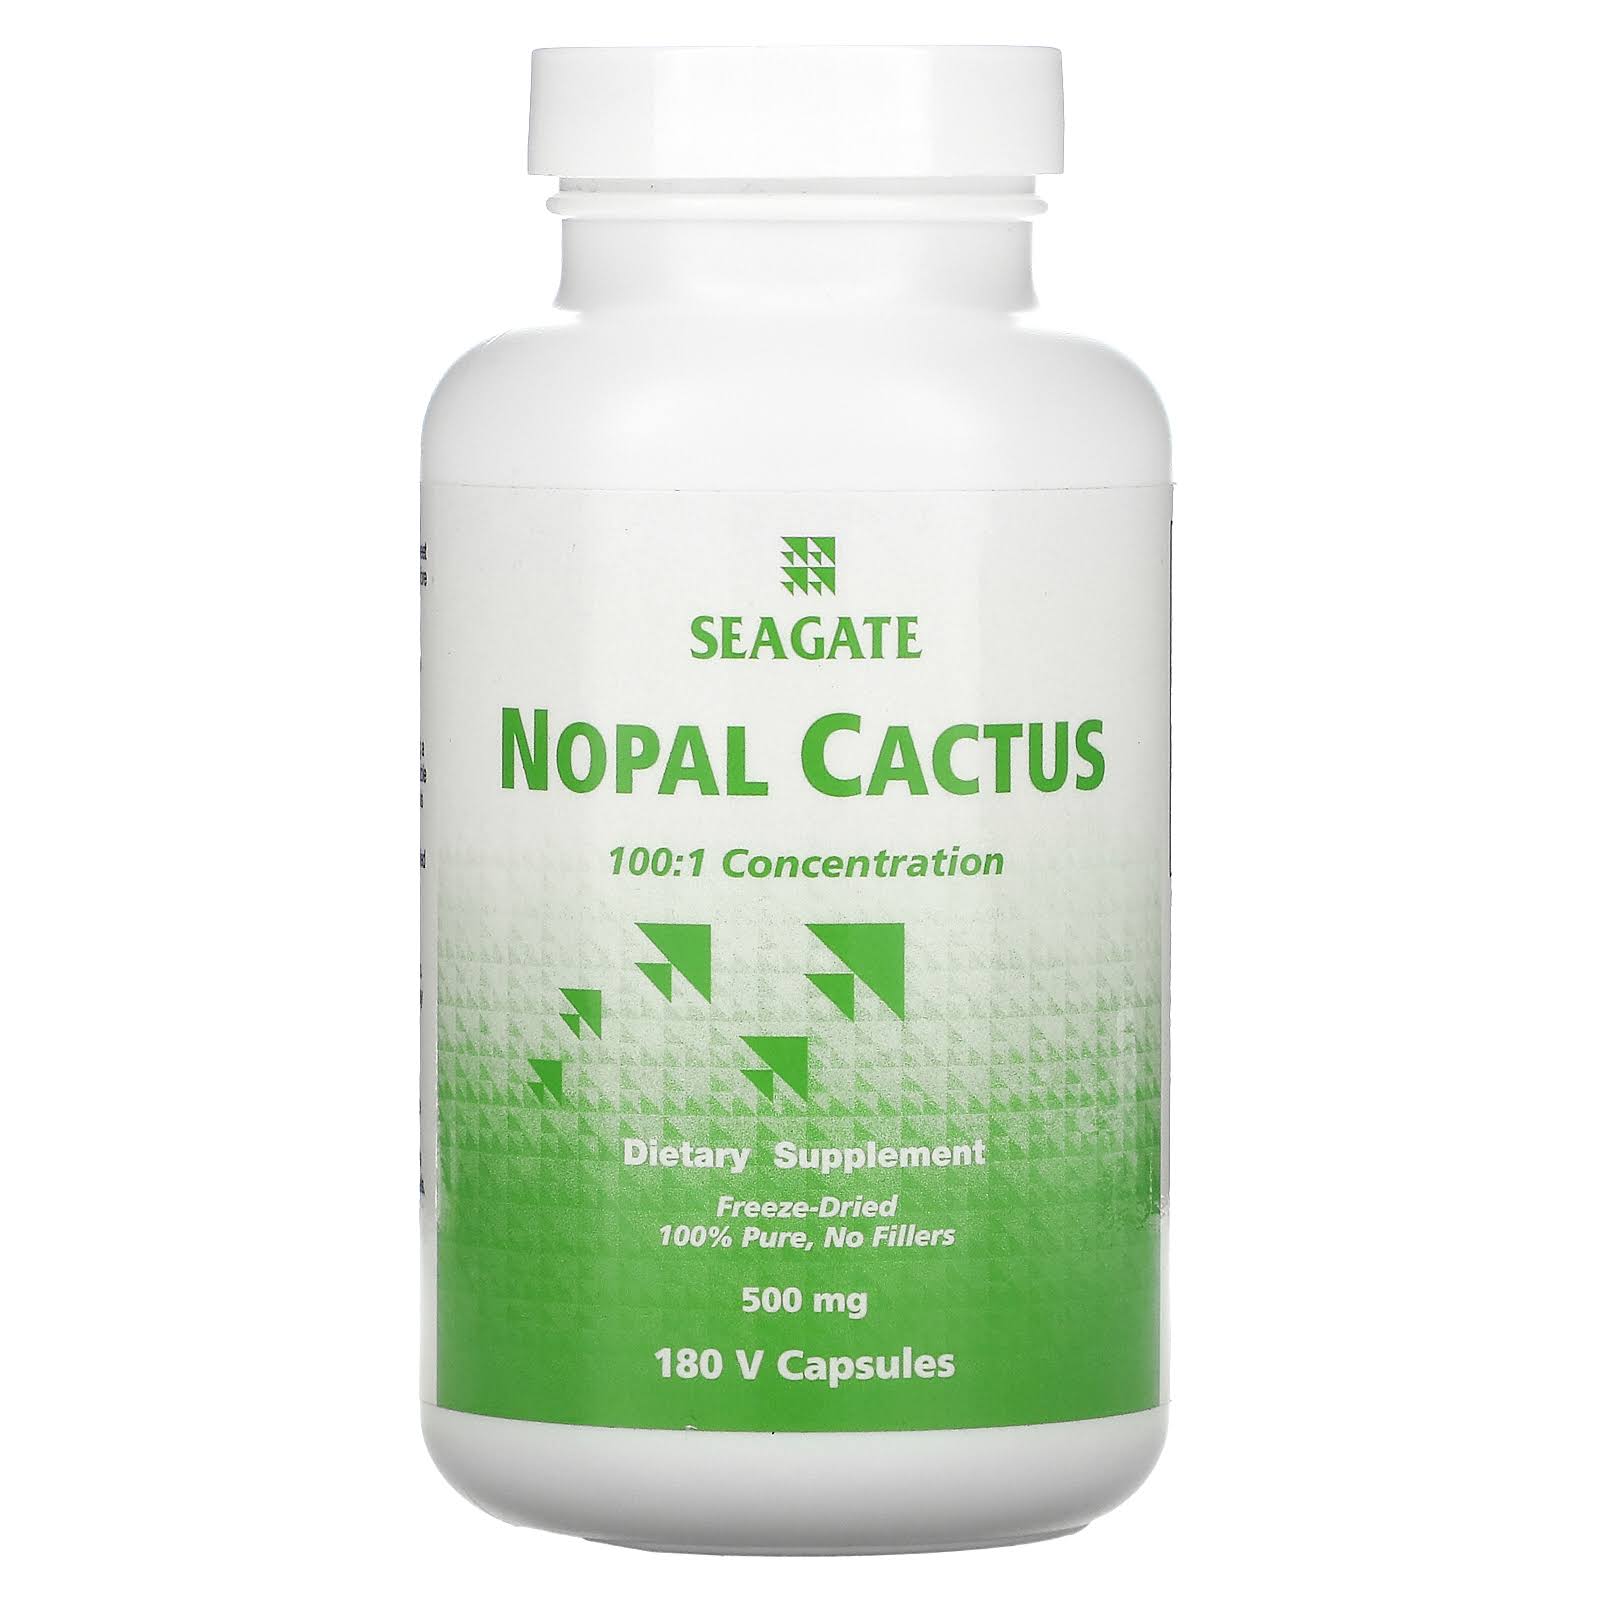 Seagate Nopal Cactus 500 mg 180 V Capsules